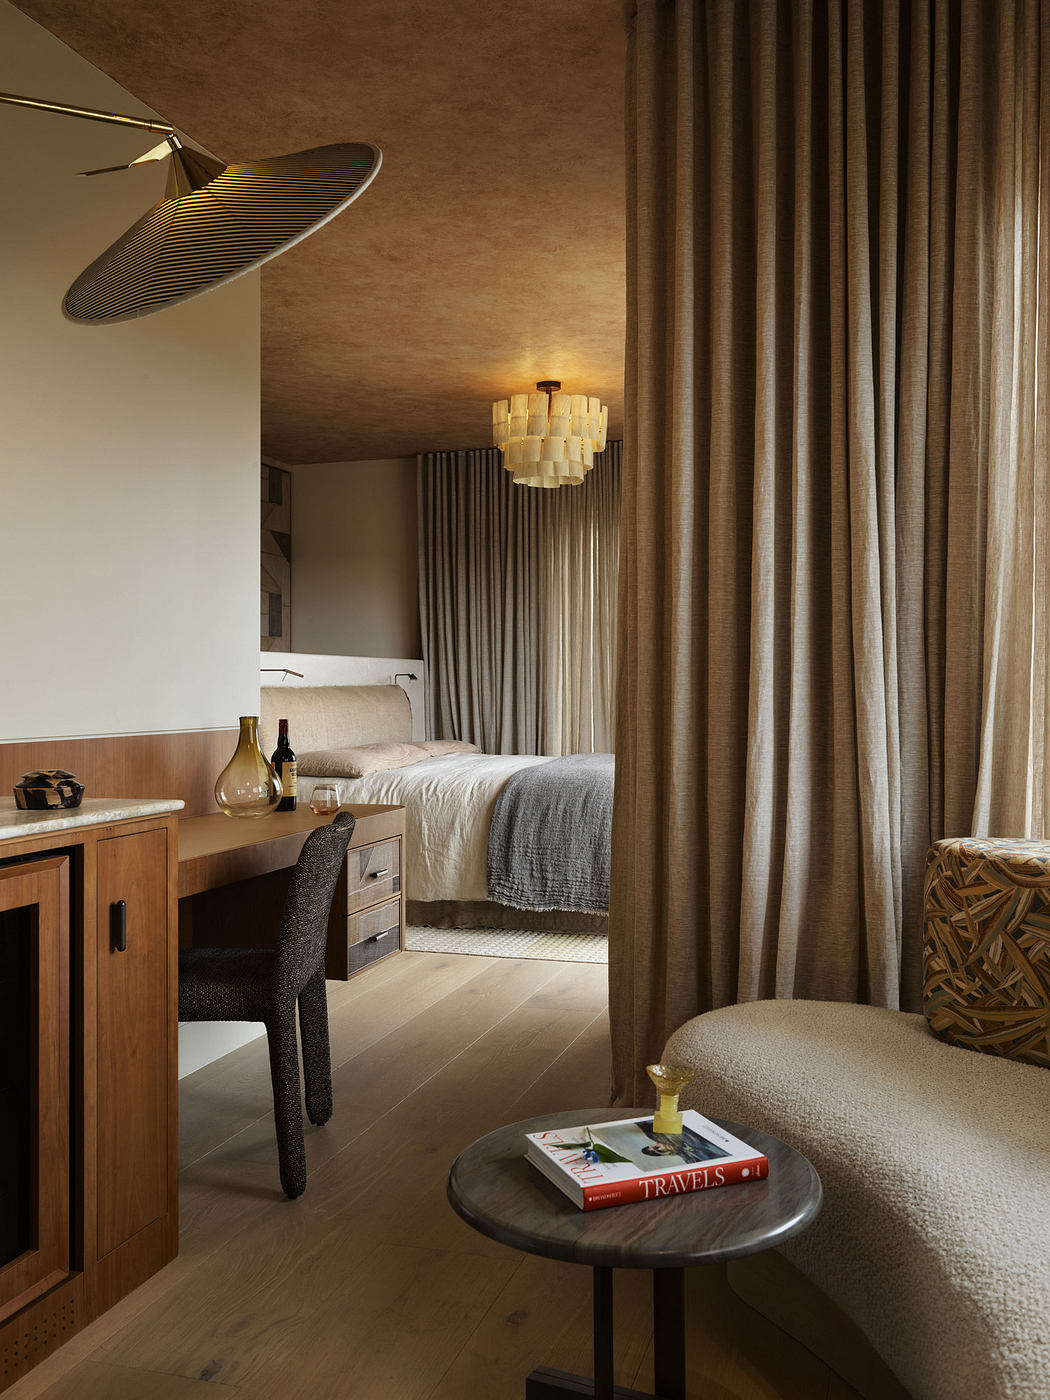 Cozy bedroom interior with earthy tones and elegant decor.